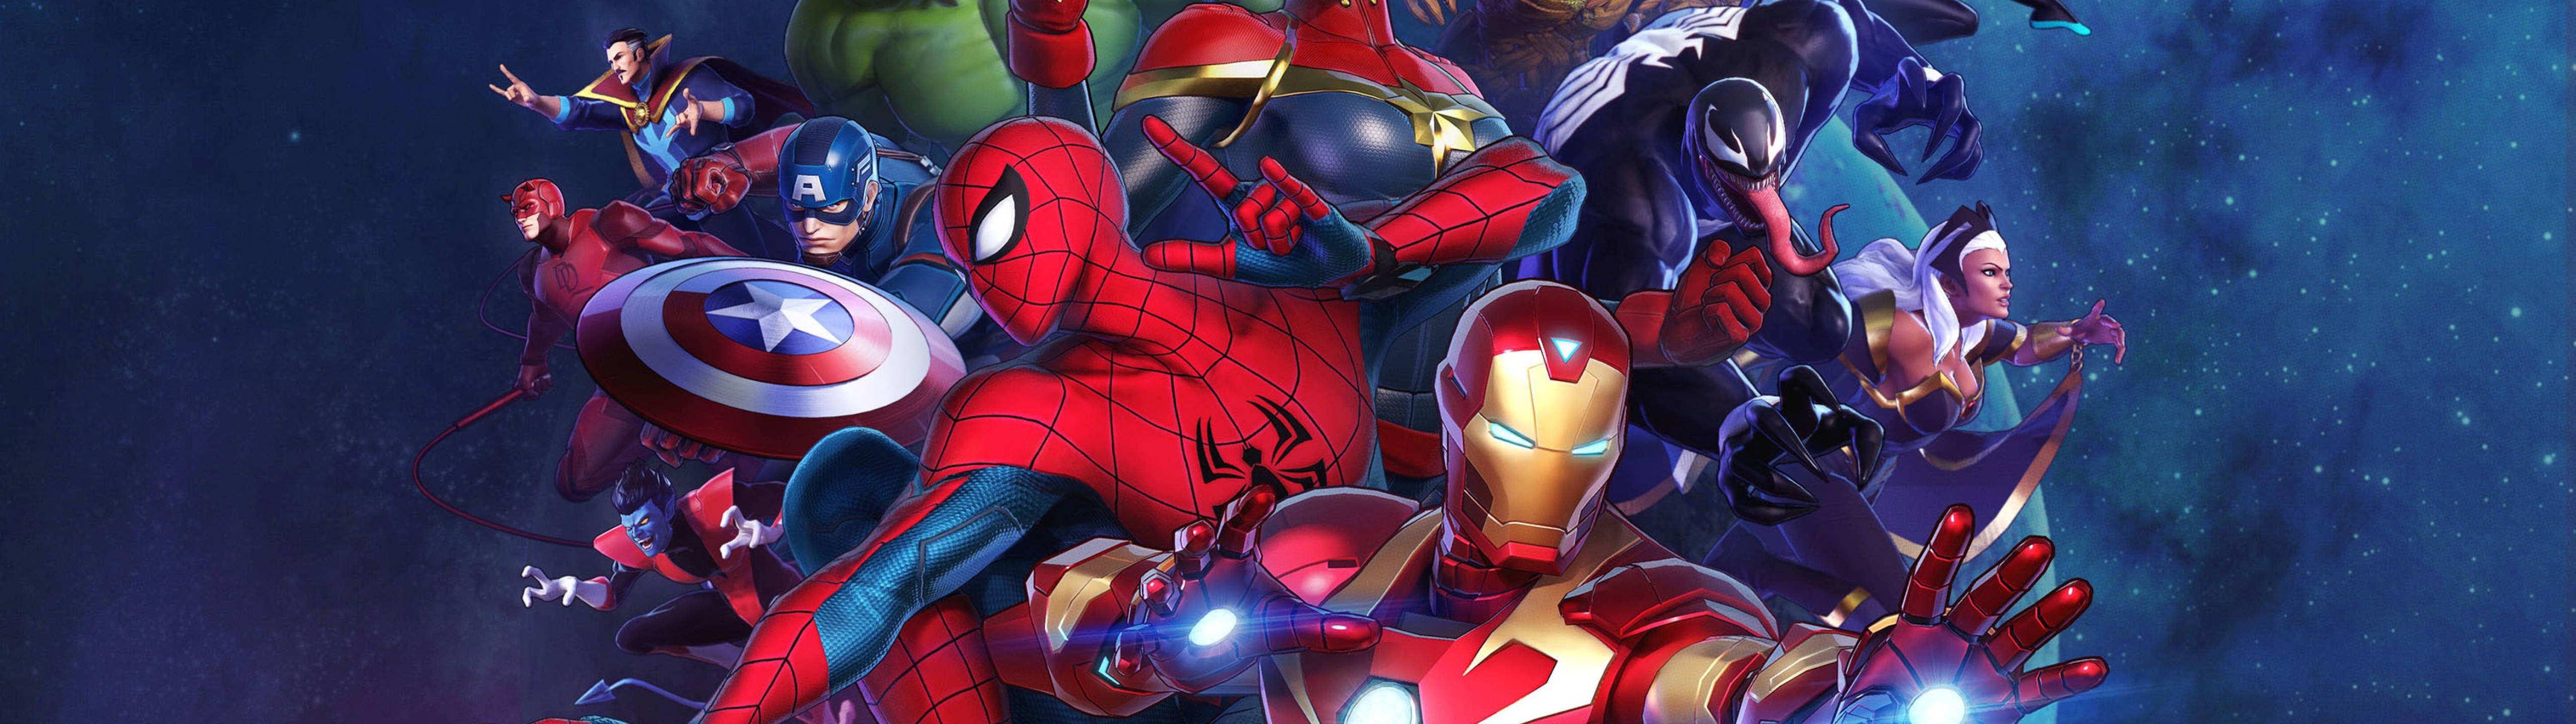 Marvel Heroes Animated 5120 X 1440 Wallpaper